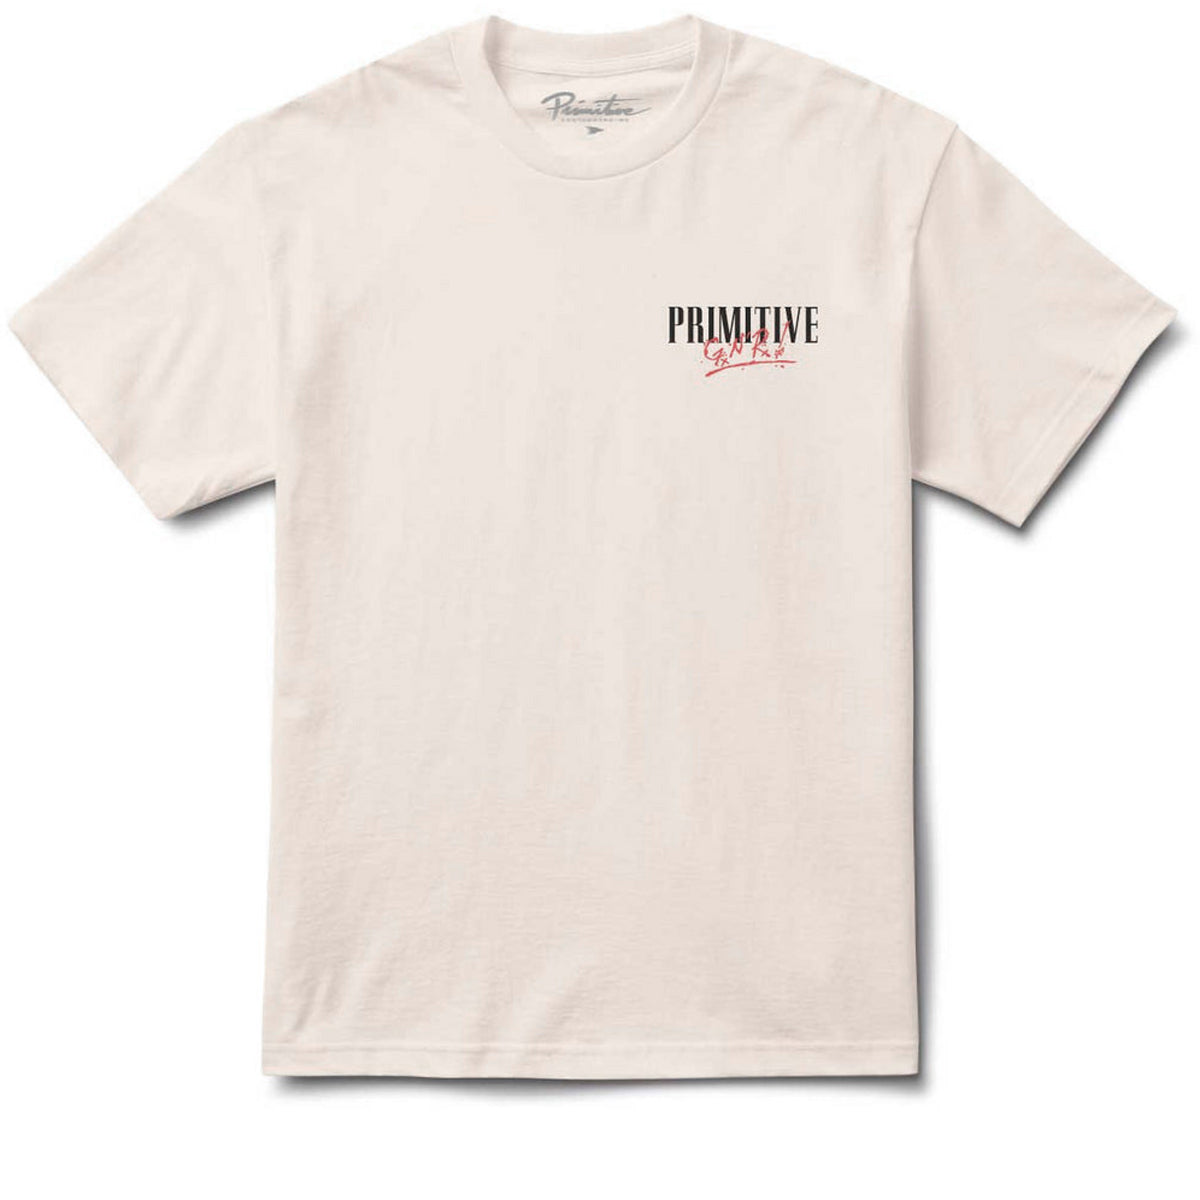 Primitive x Guns N' Roses Illusion Dirty P T-Shirt - Cream image 2